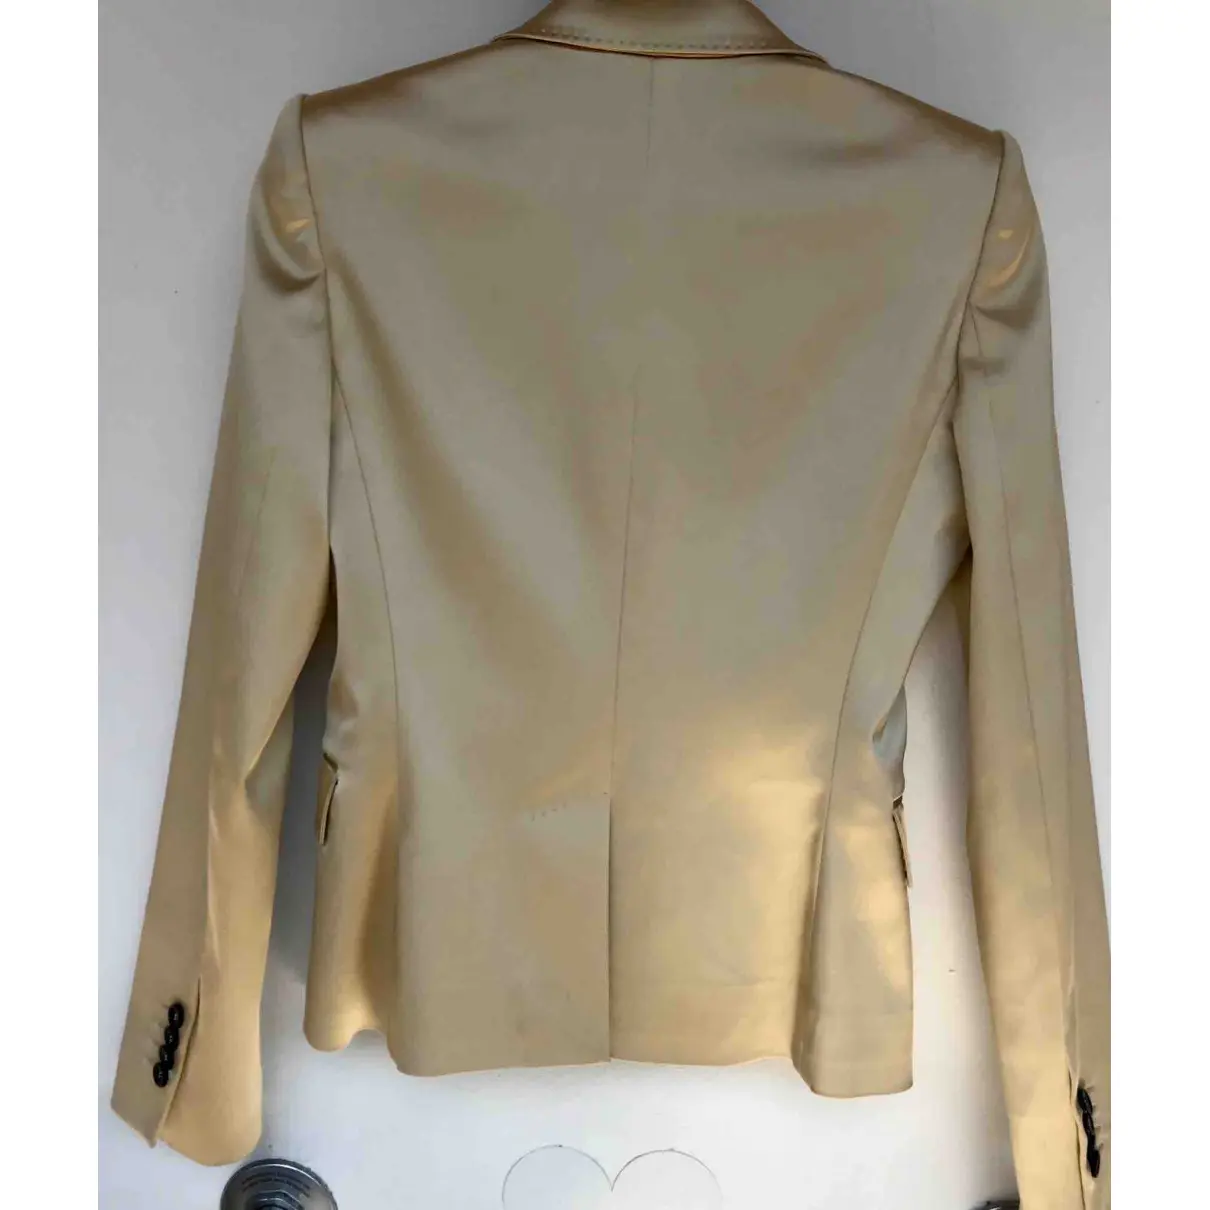 Buy D&G Gold Polyester Jacket online